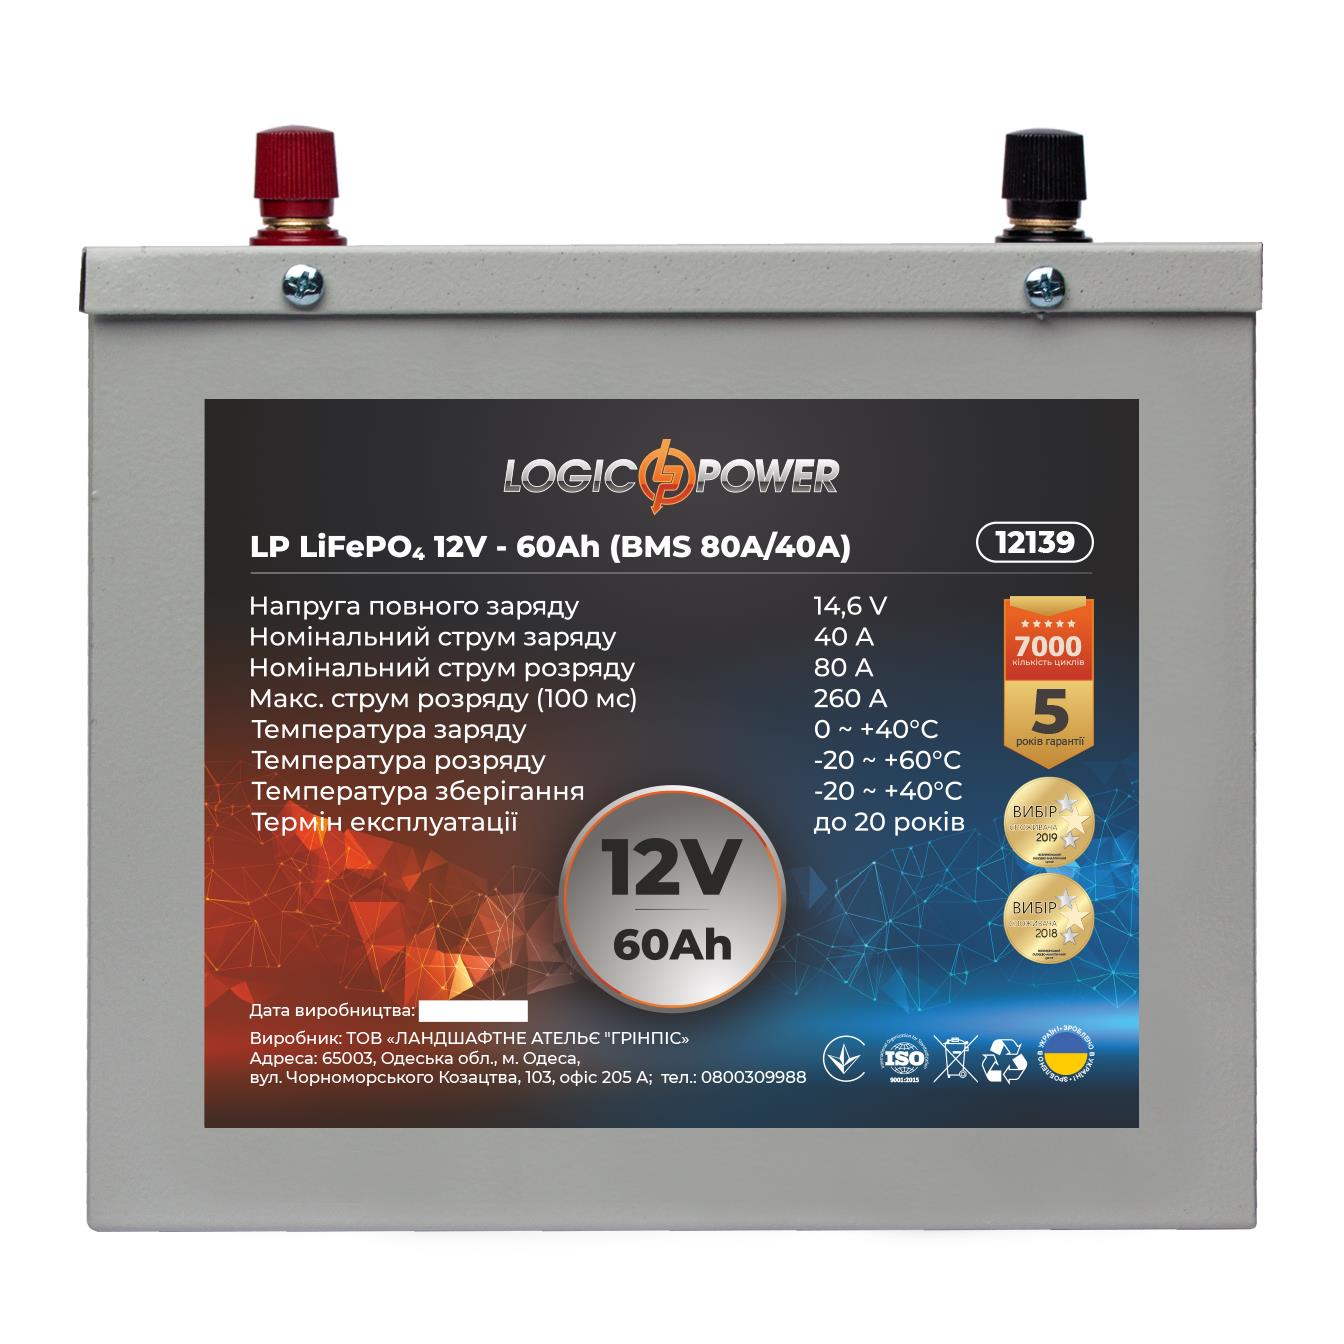 Акумулятор літій-залізо-фосфатний LogicPower LP LiFePO4 12V - 60 Ah (BMS 80A/40A) метал (12139)